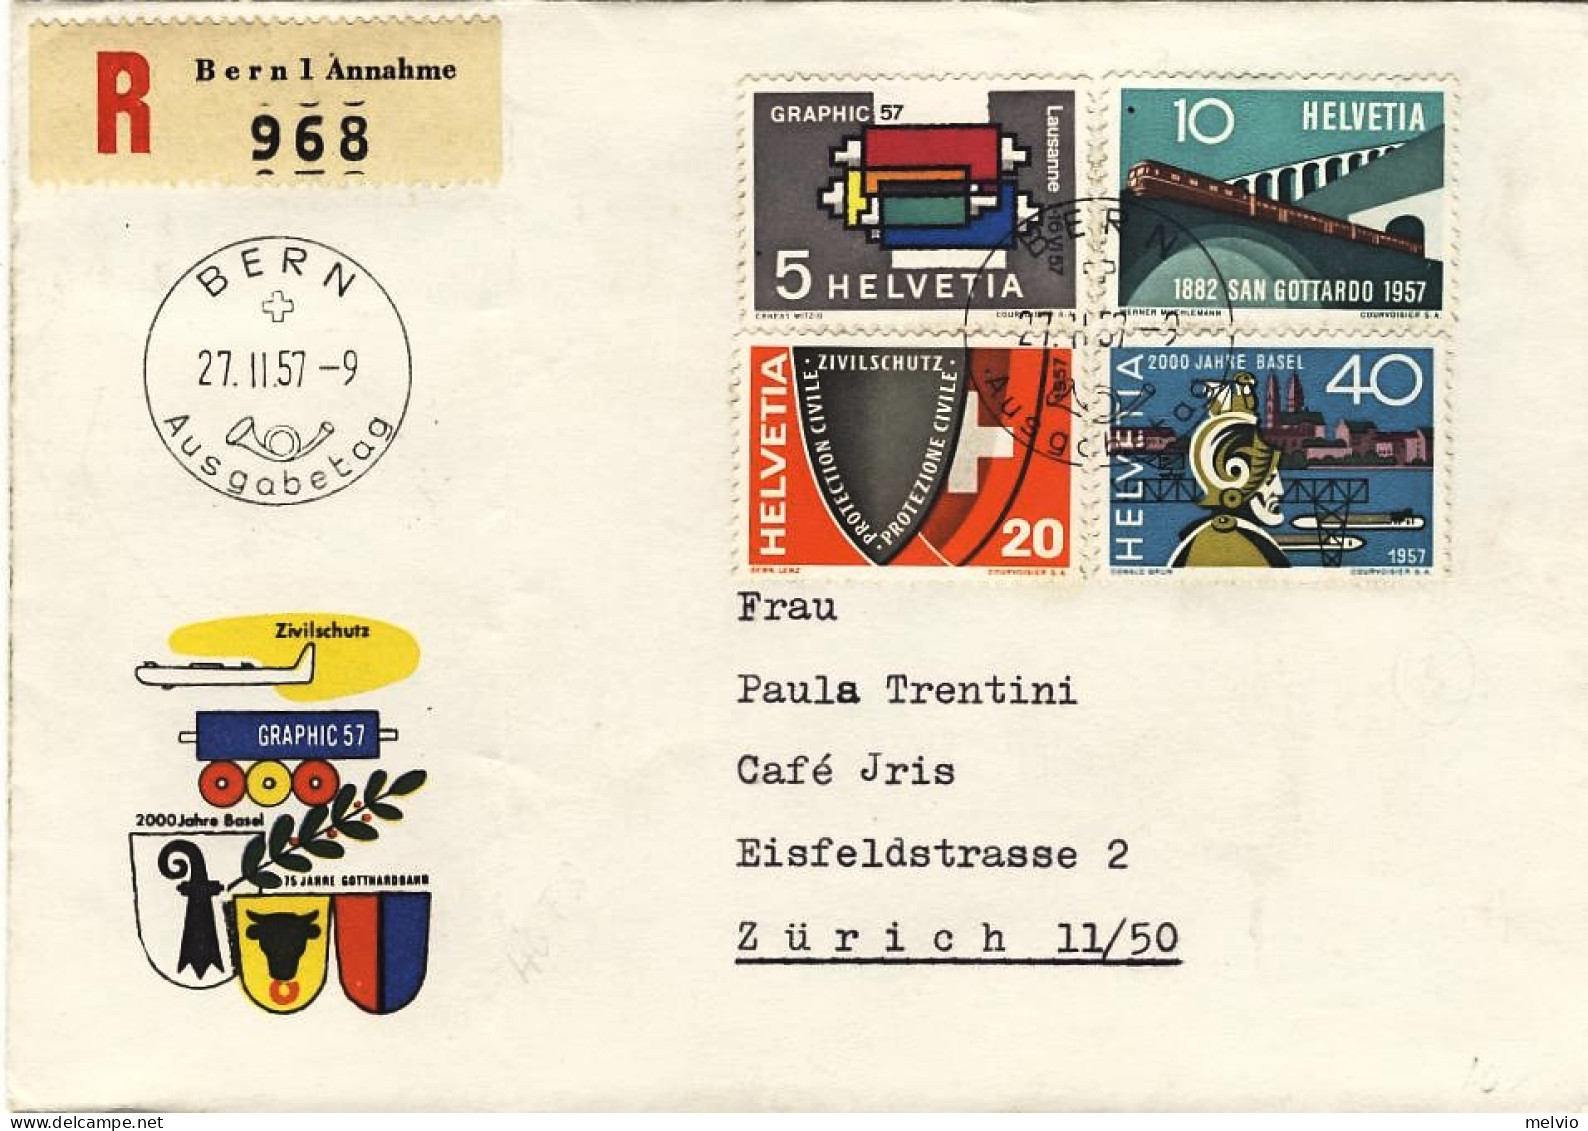 1957-Svizzera Raccomandata Fdc Illustrata Affrancata S.4v."Serie Di Propaganda" - FDC